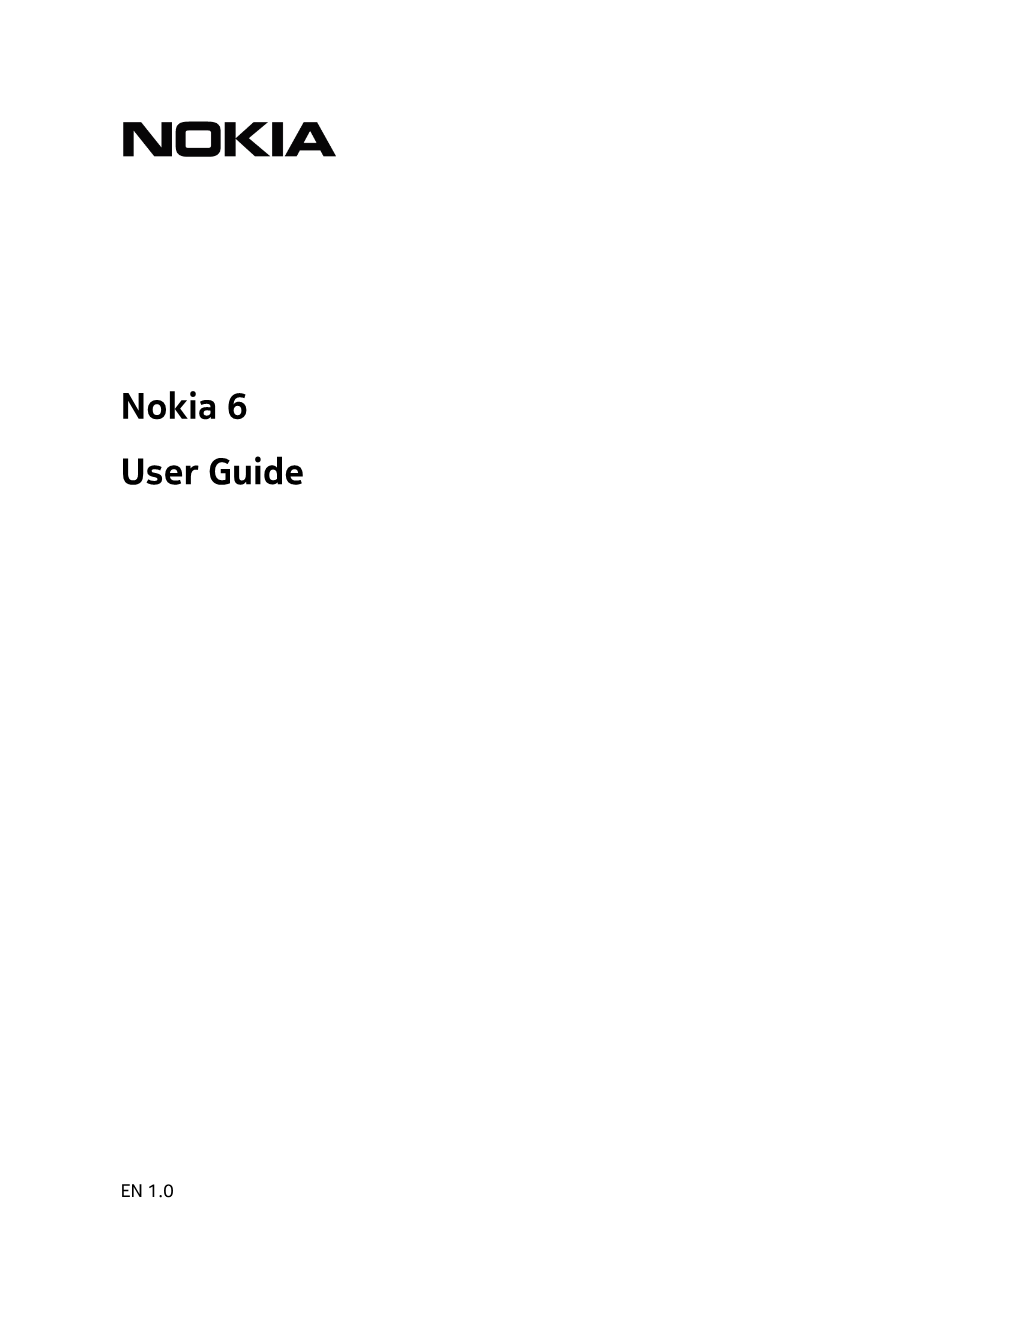 Nokia 6 User Guide